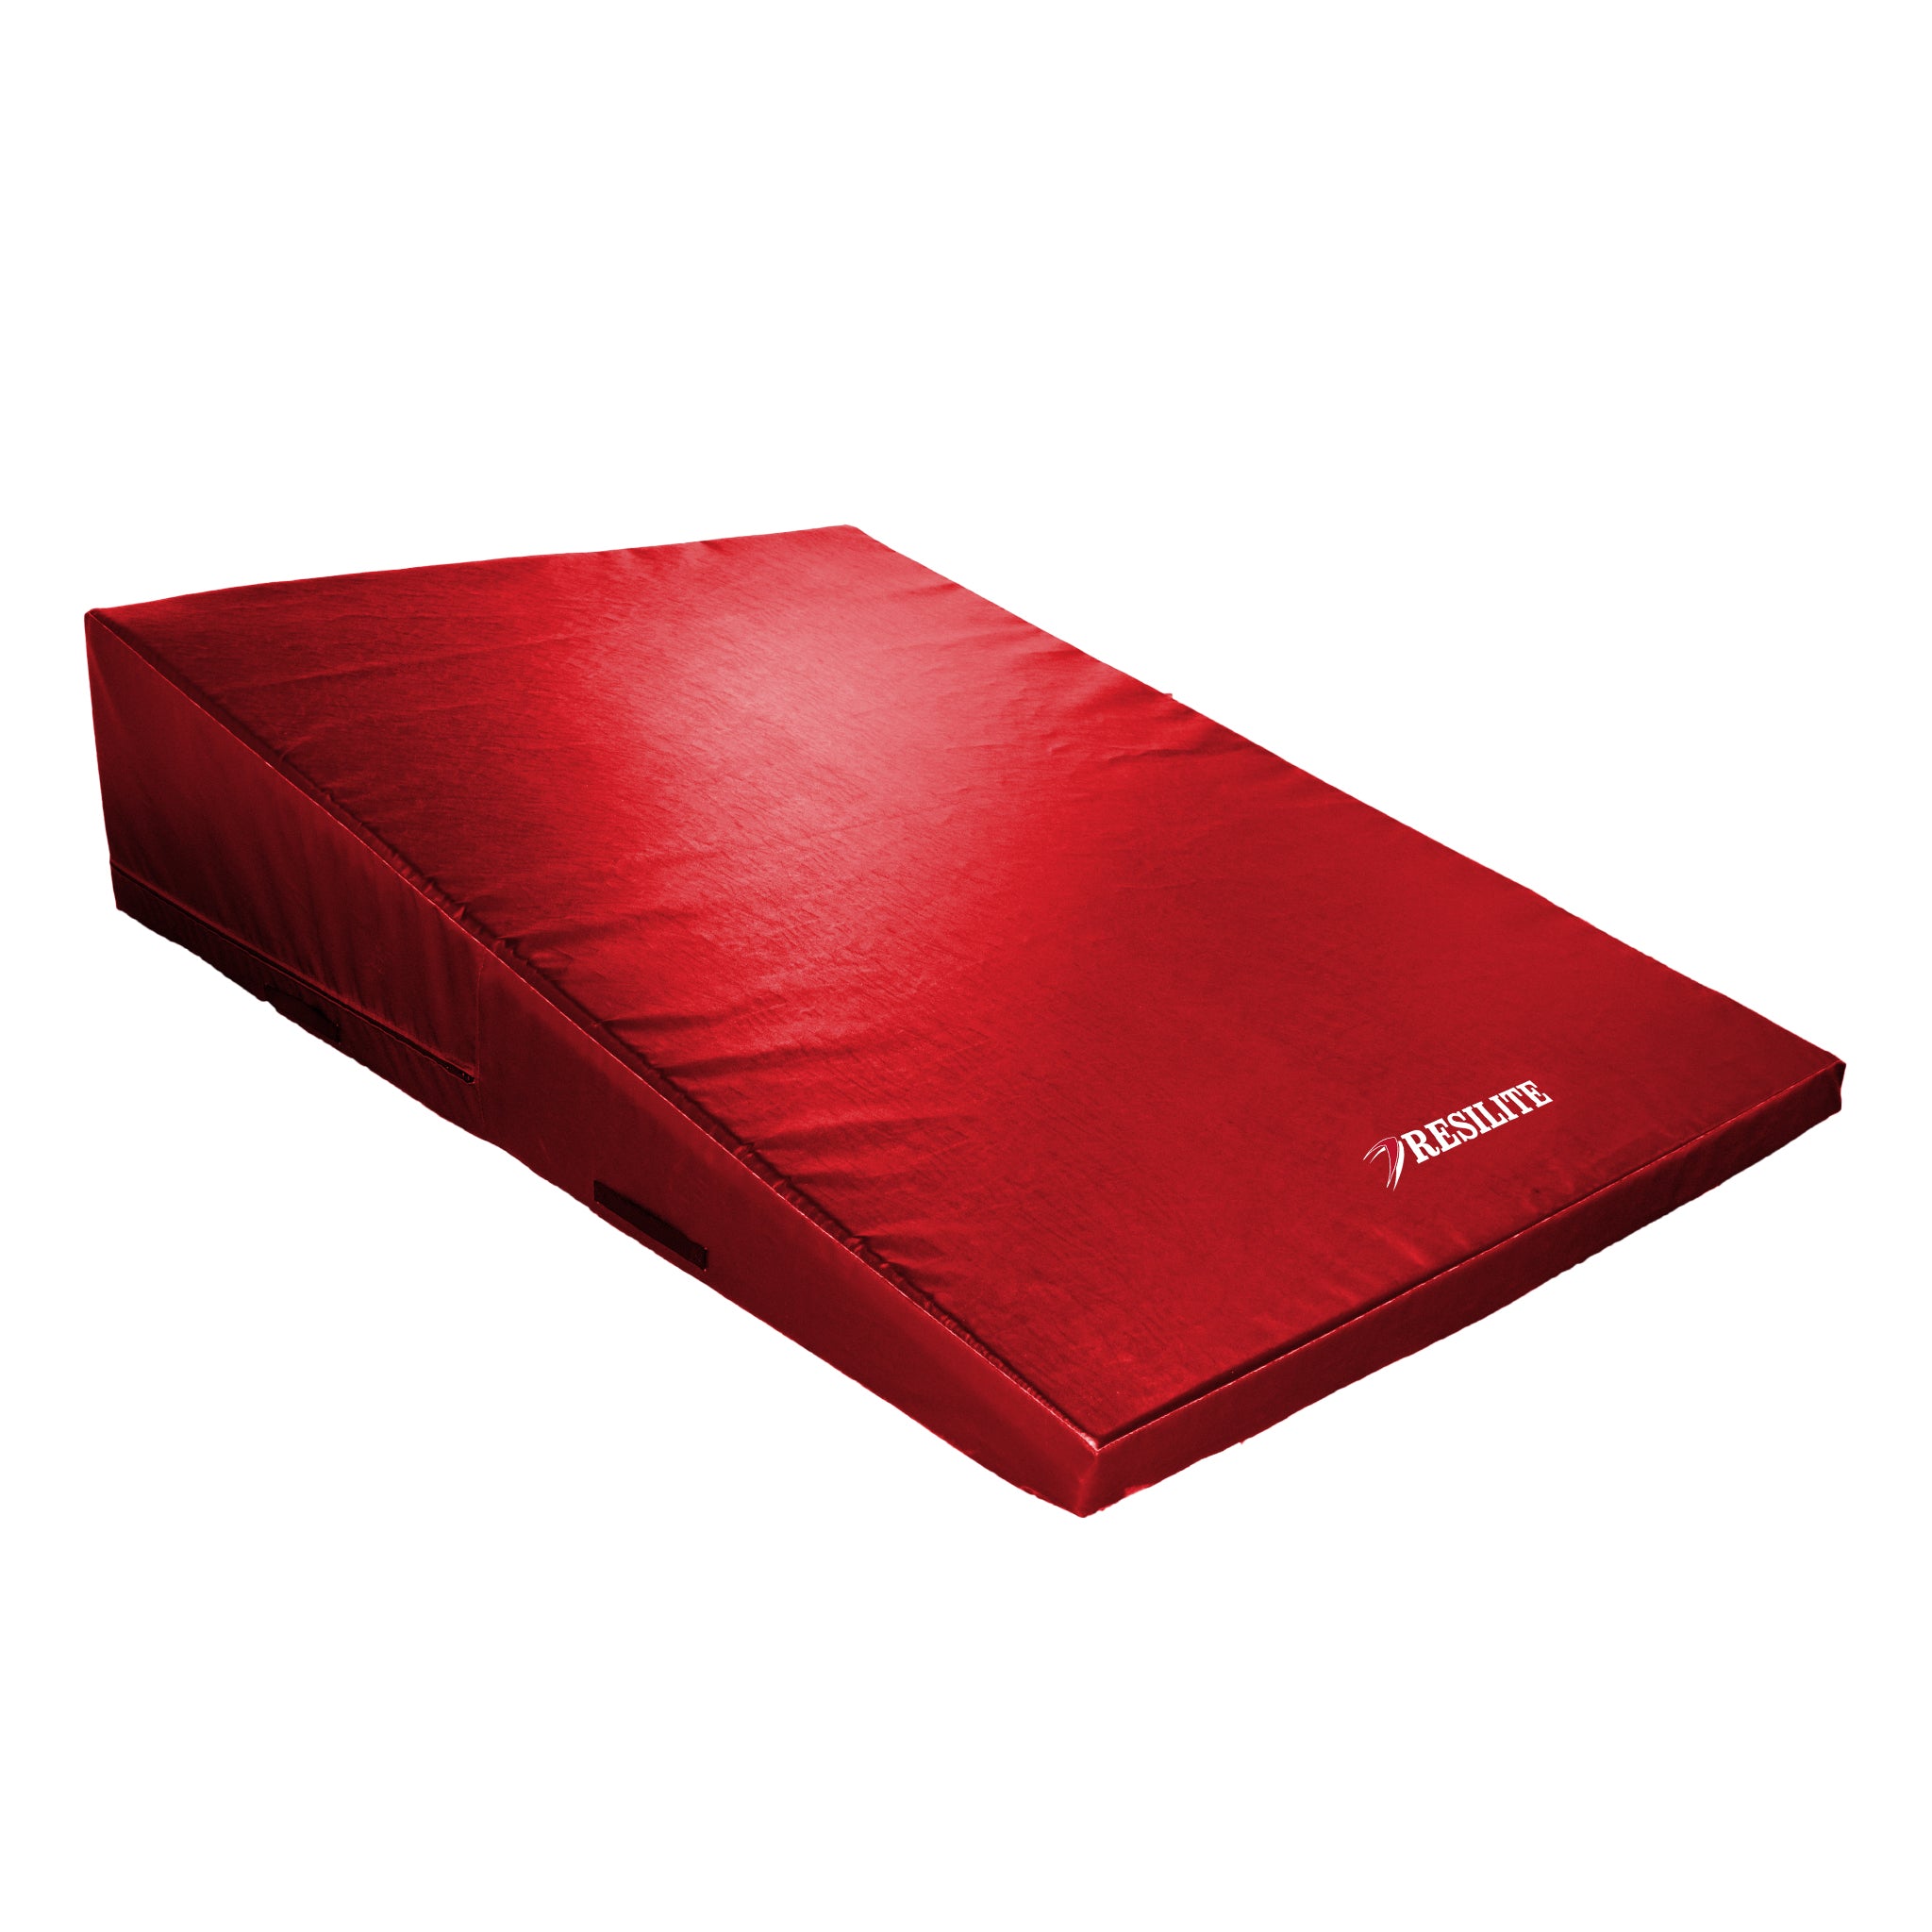 Resilite Gymnastics Mats - Skill Cushions, Competition Landing